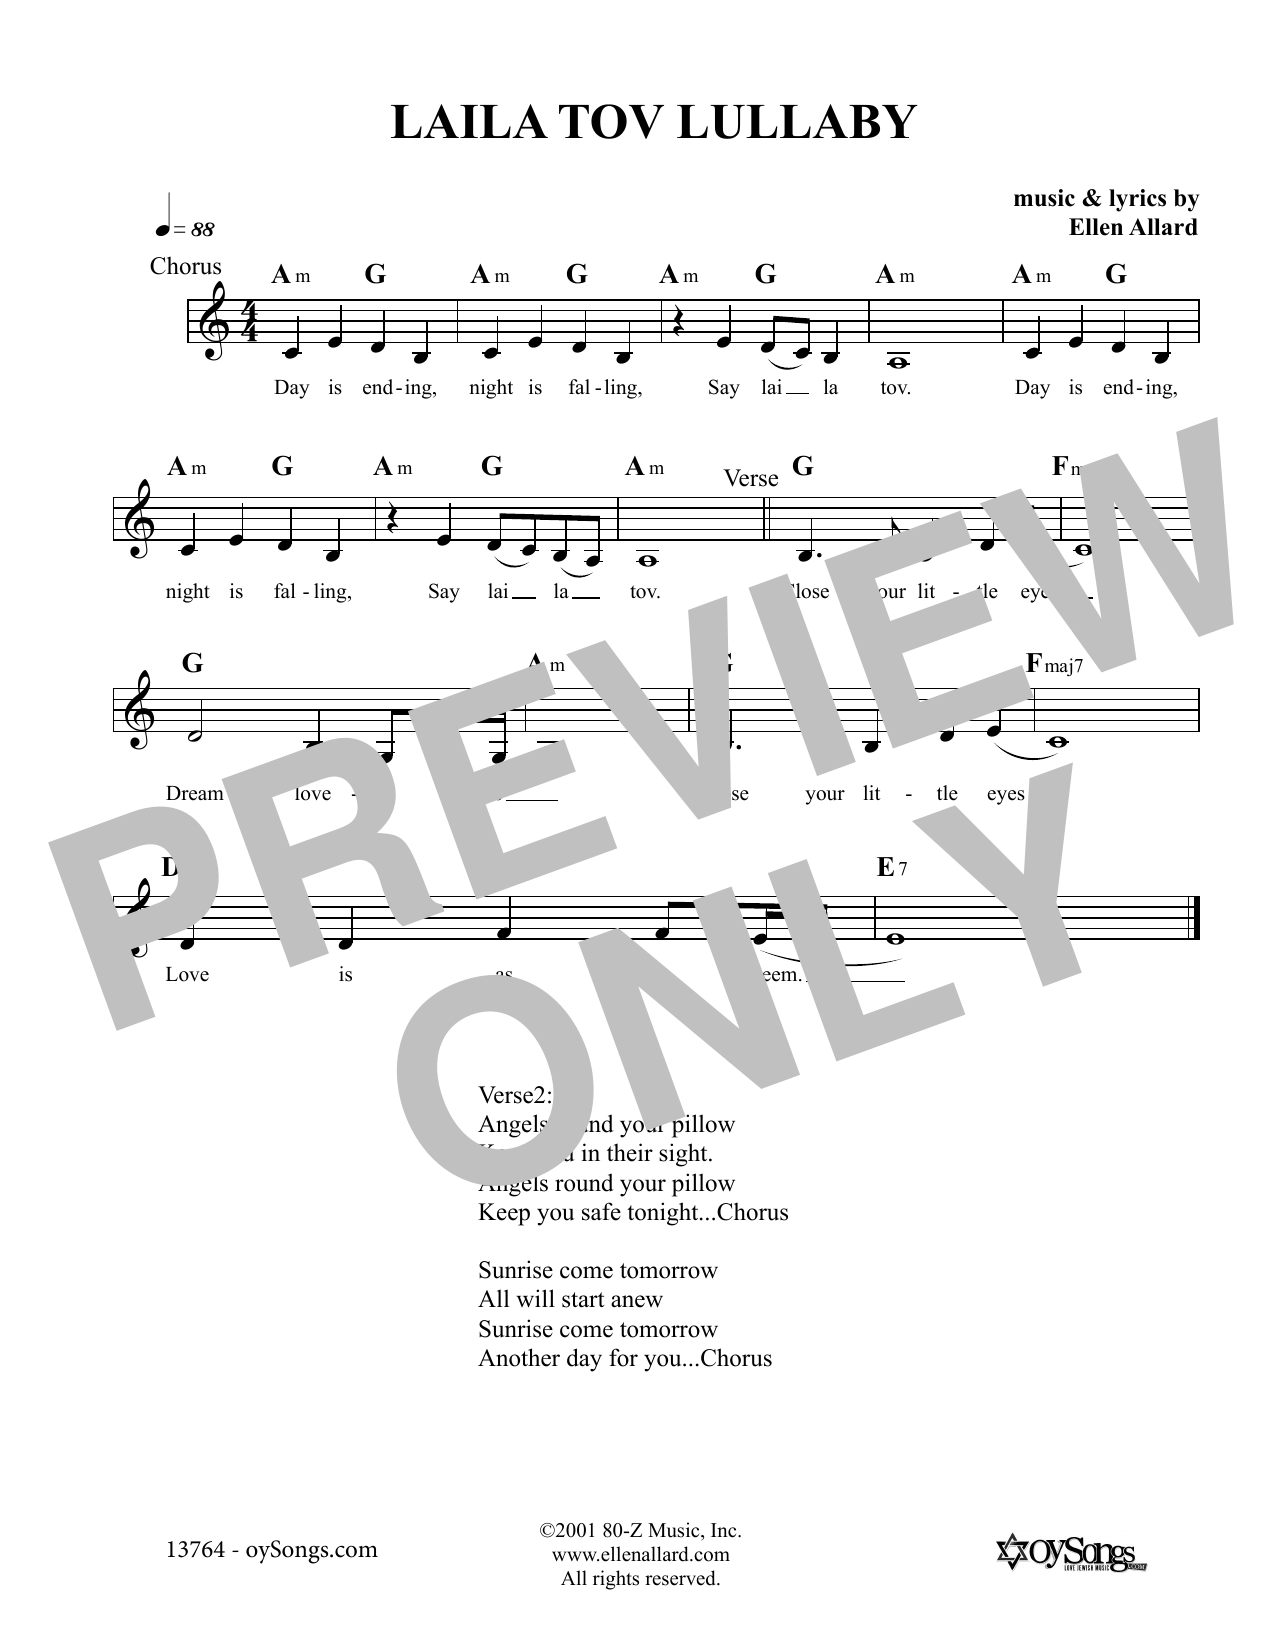 Ellen Allard Laila Tov Lullaby Sheet Music Notes & Chords for Melody Line, Lyrics & Chords - Download or Print PDF